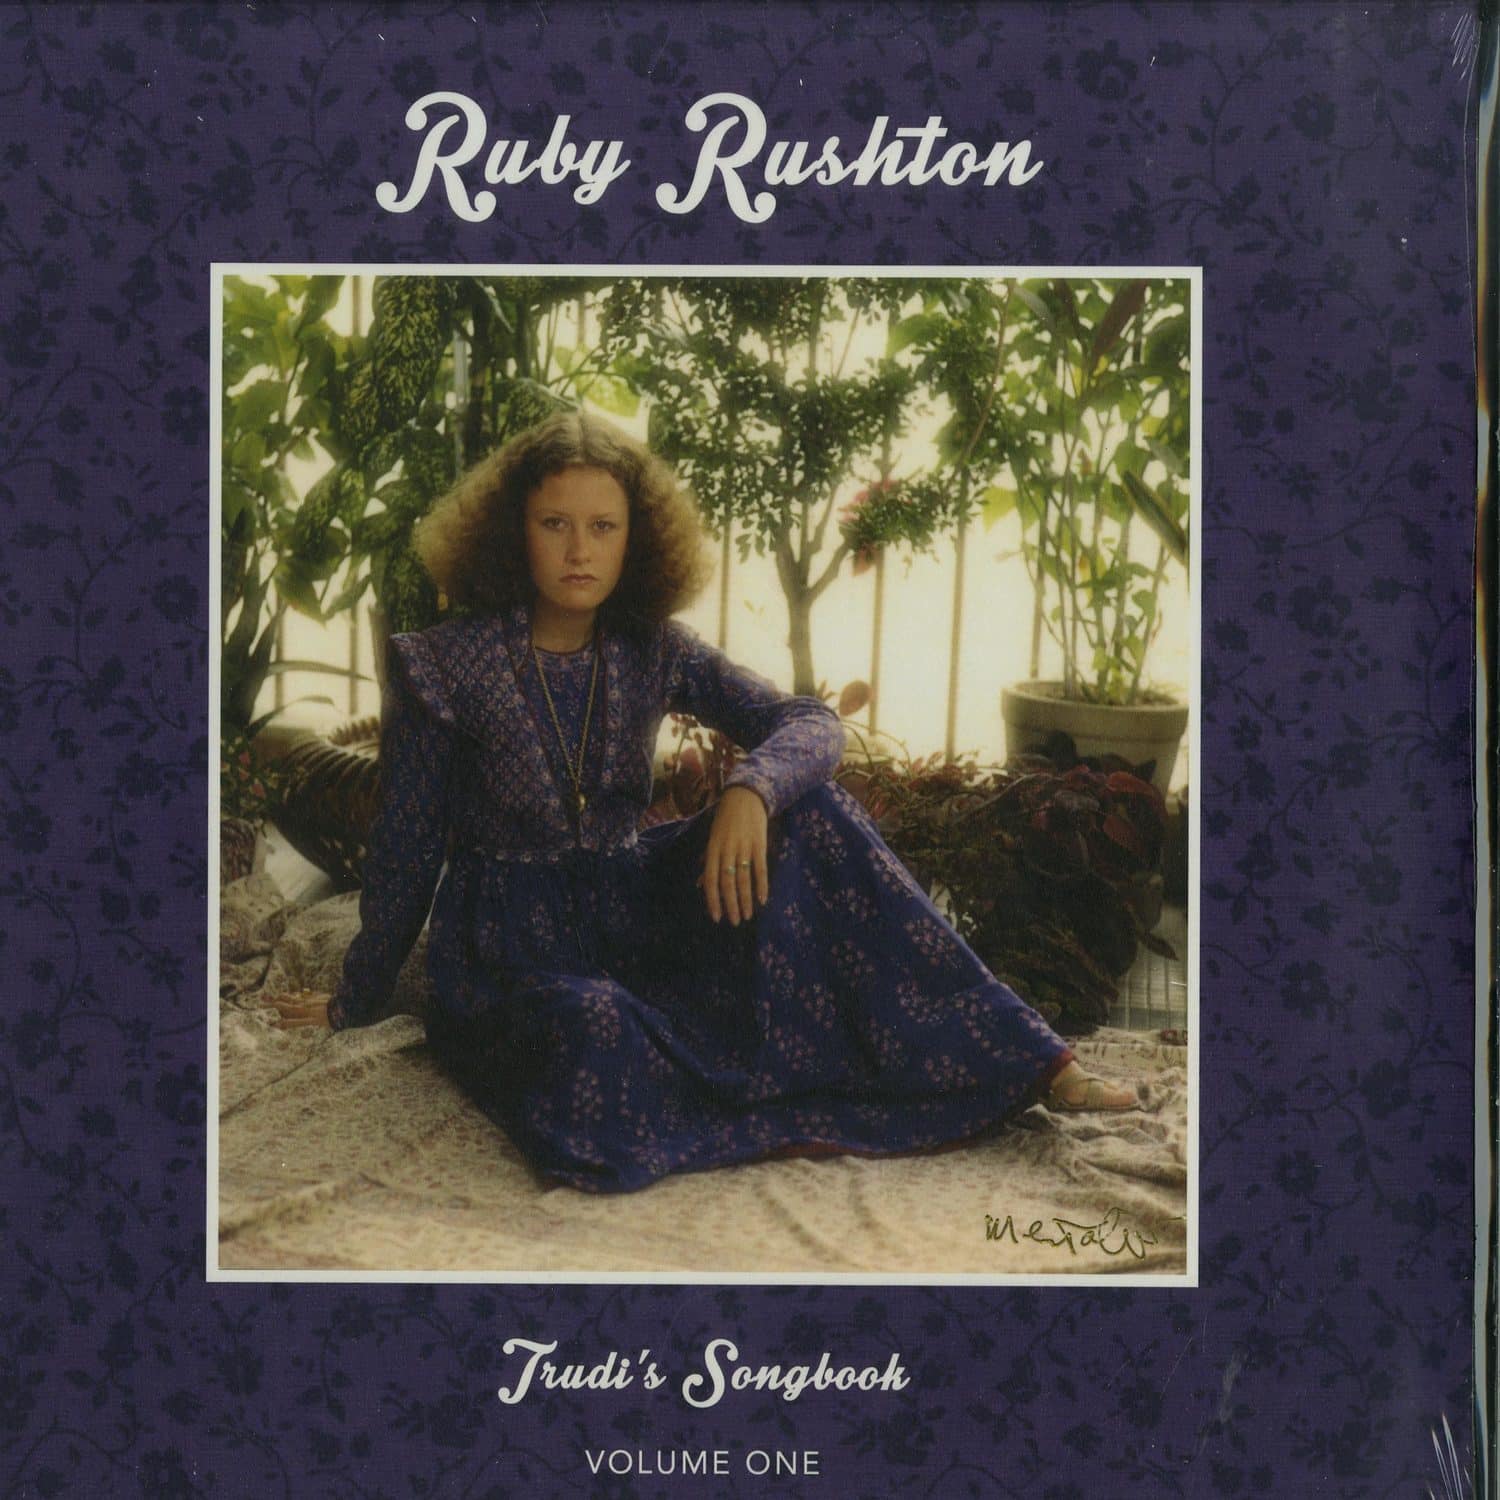 Ruby Rushton - TRUDI S SONGBOOK VOL. 1 